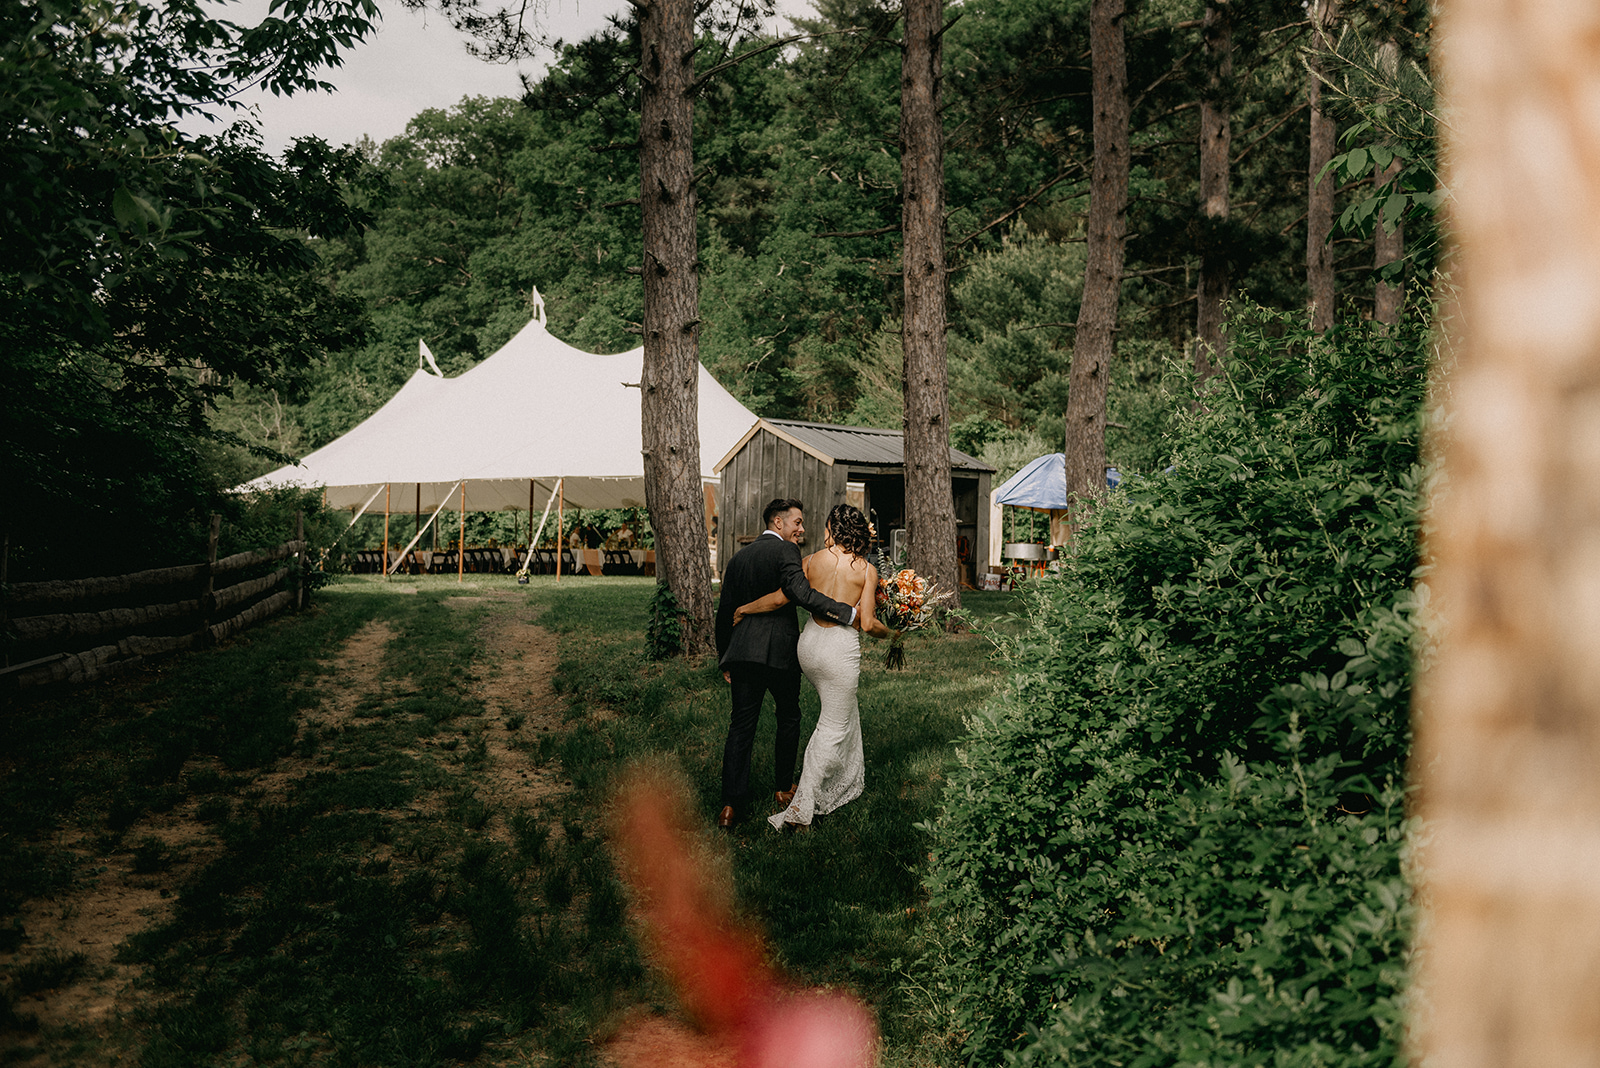 Walker Homestead Antique Farm Tented Wedding in Massachusetts | Stacey & Nate